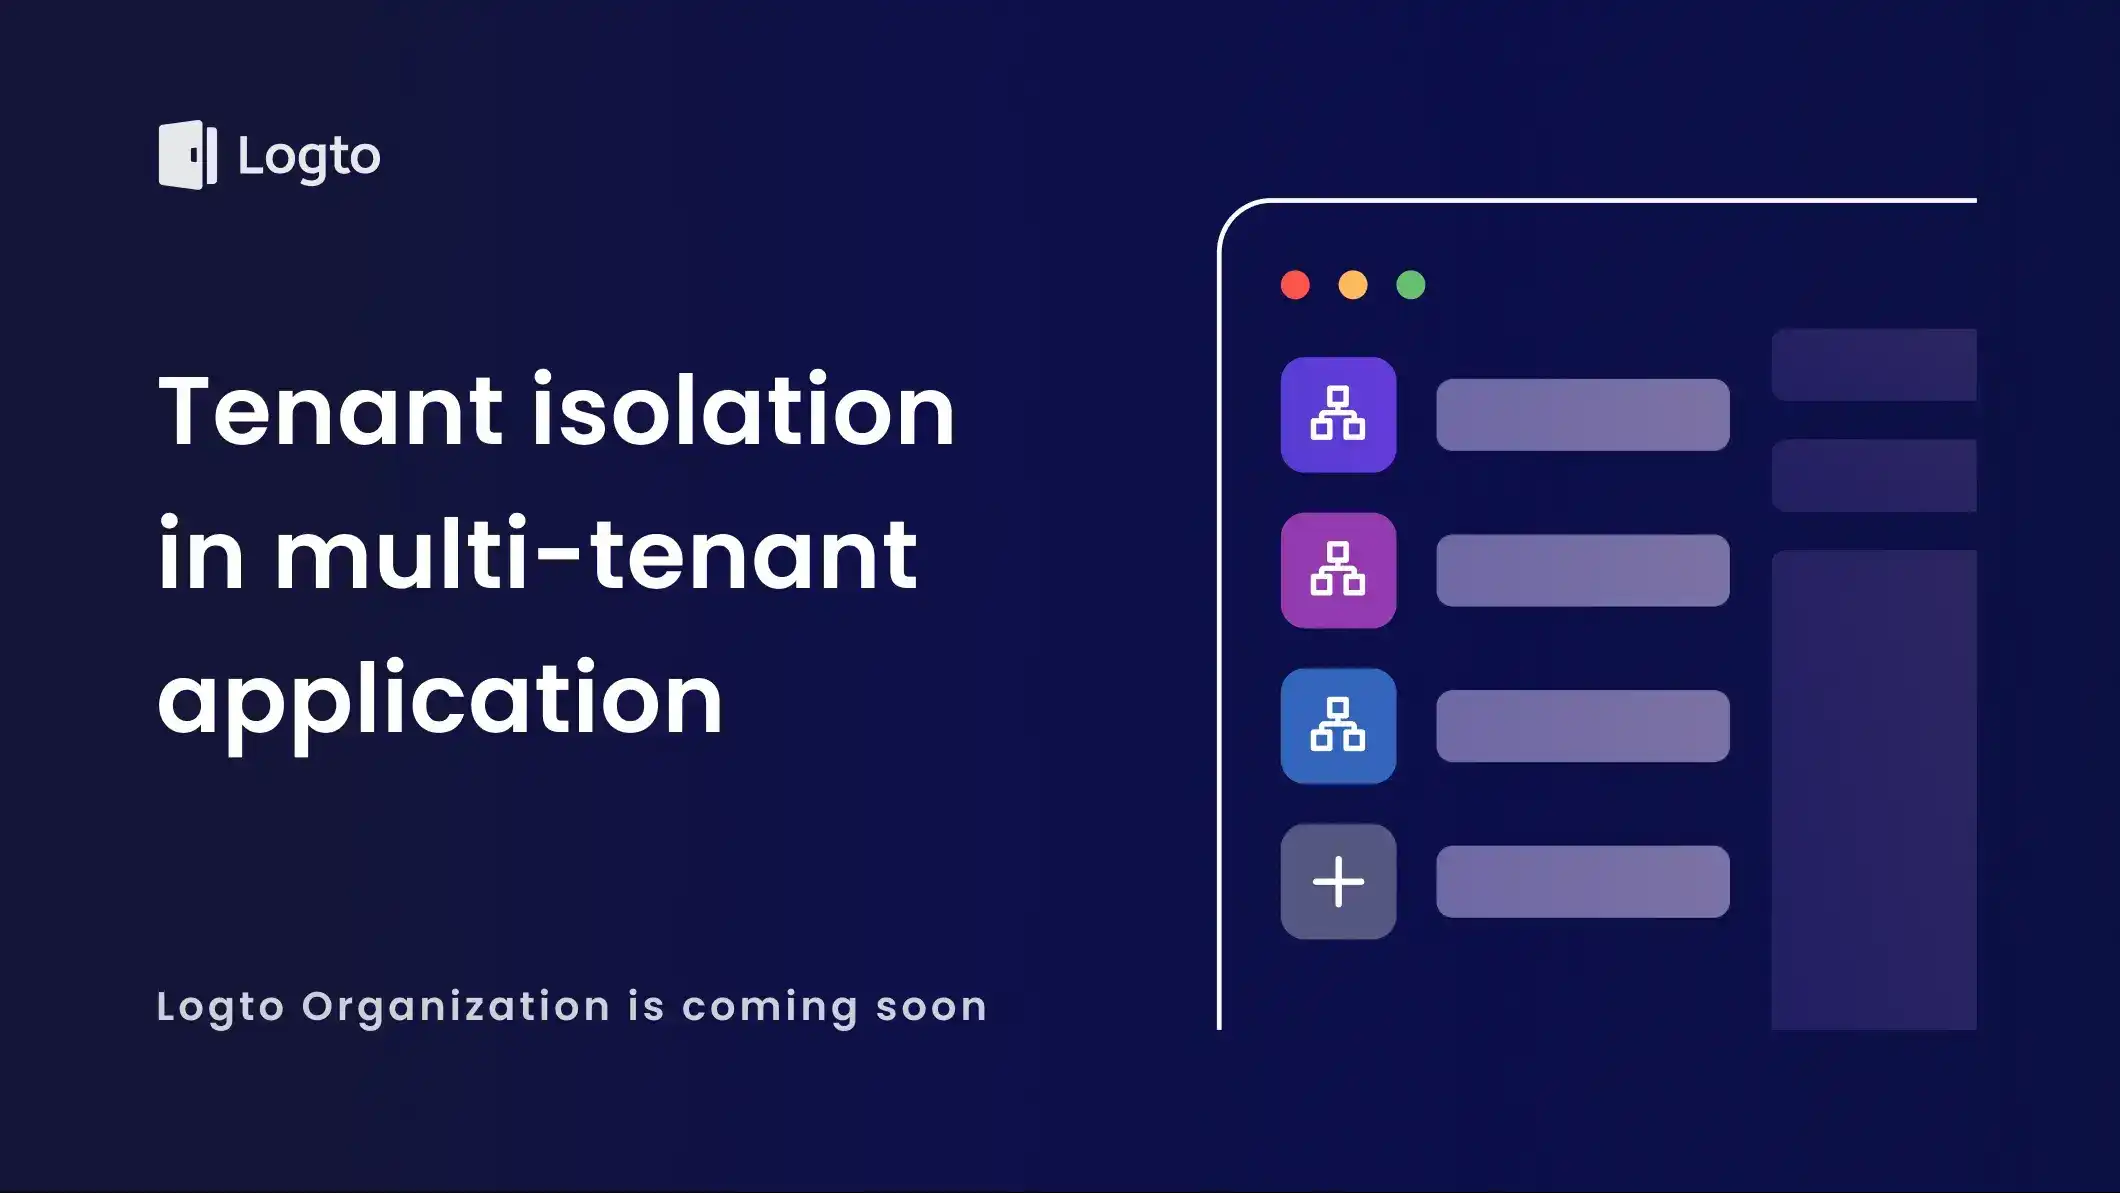 Tenant isolation in multi-tenant application